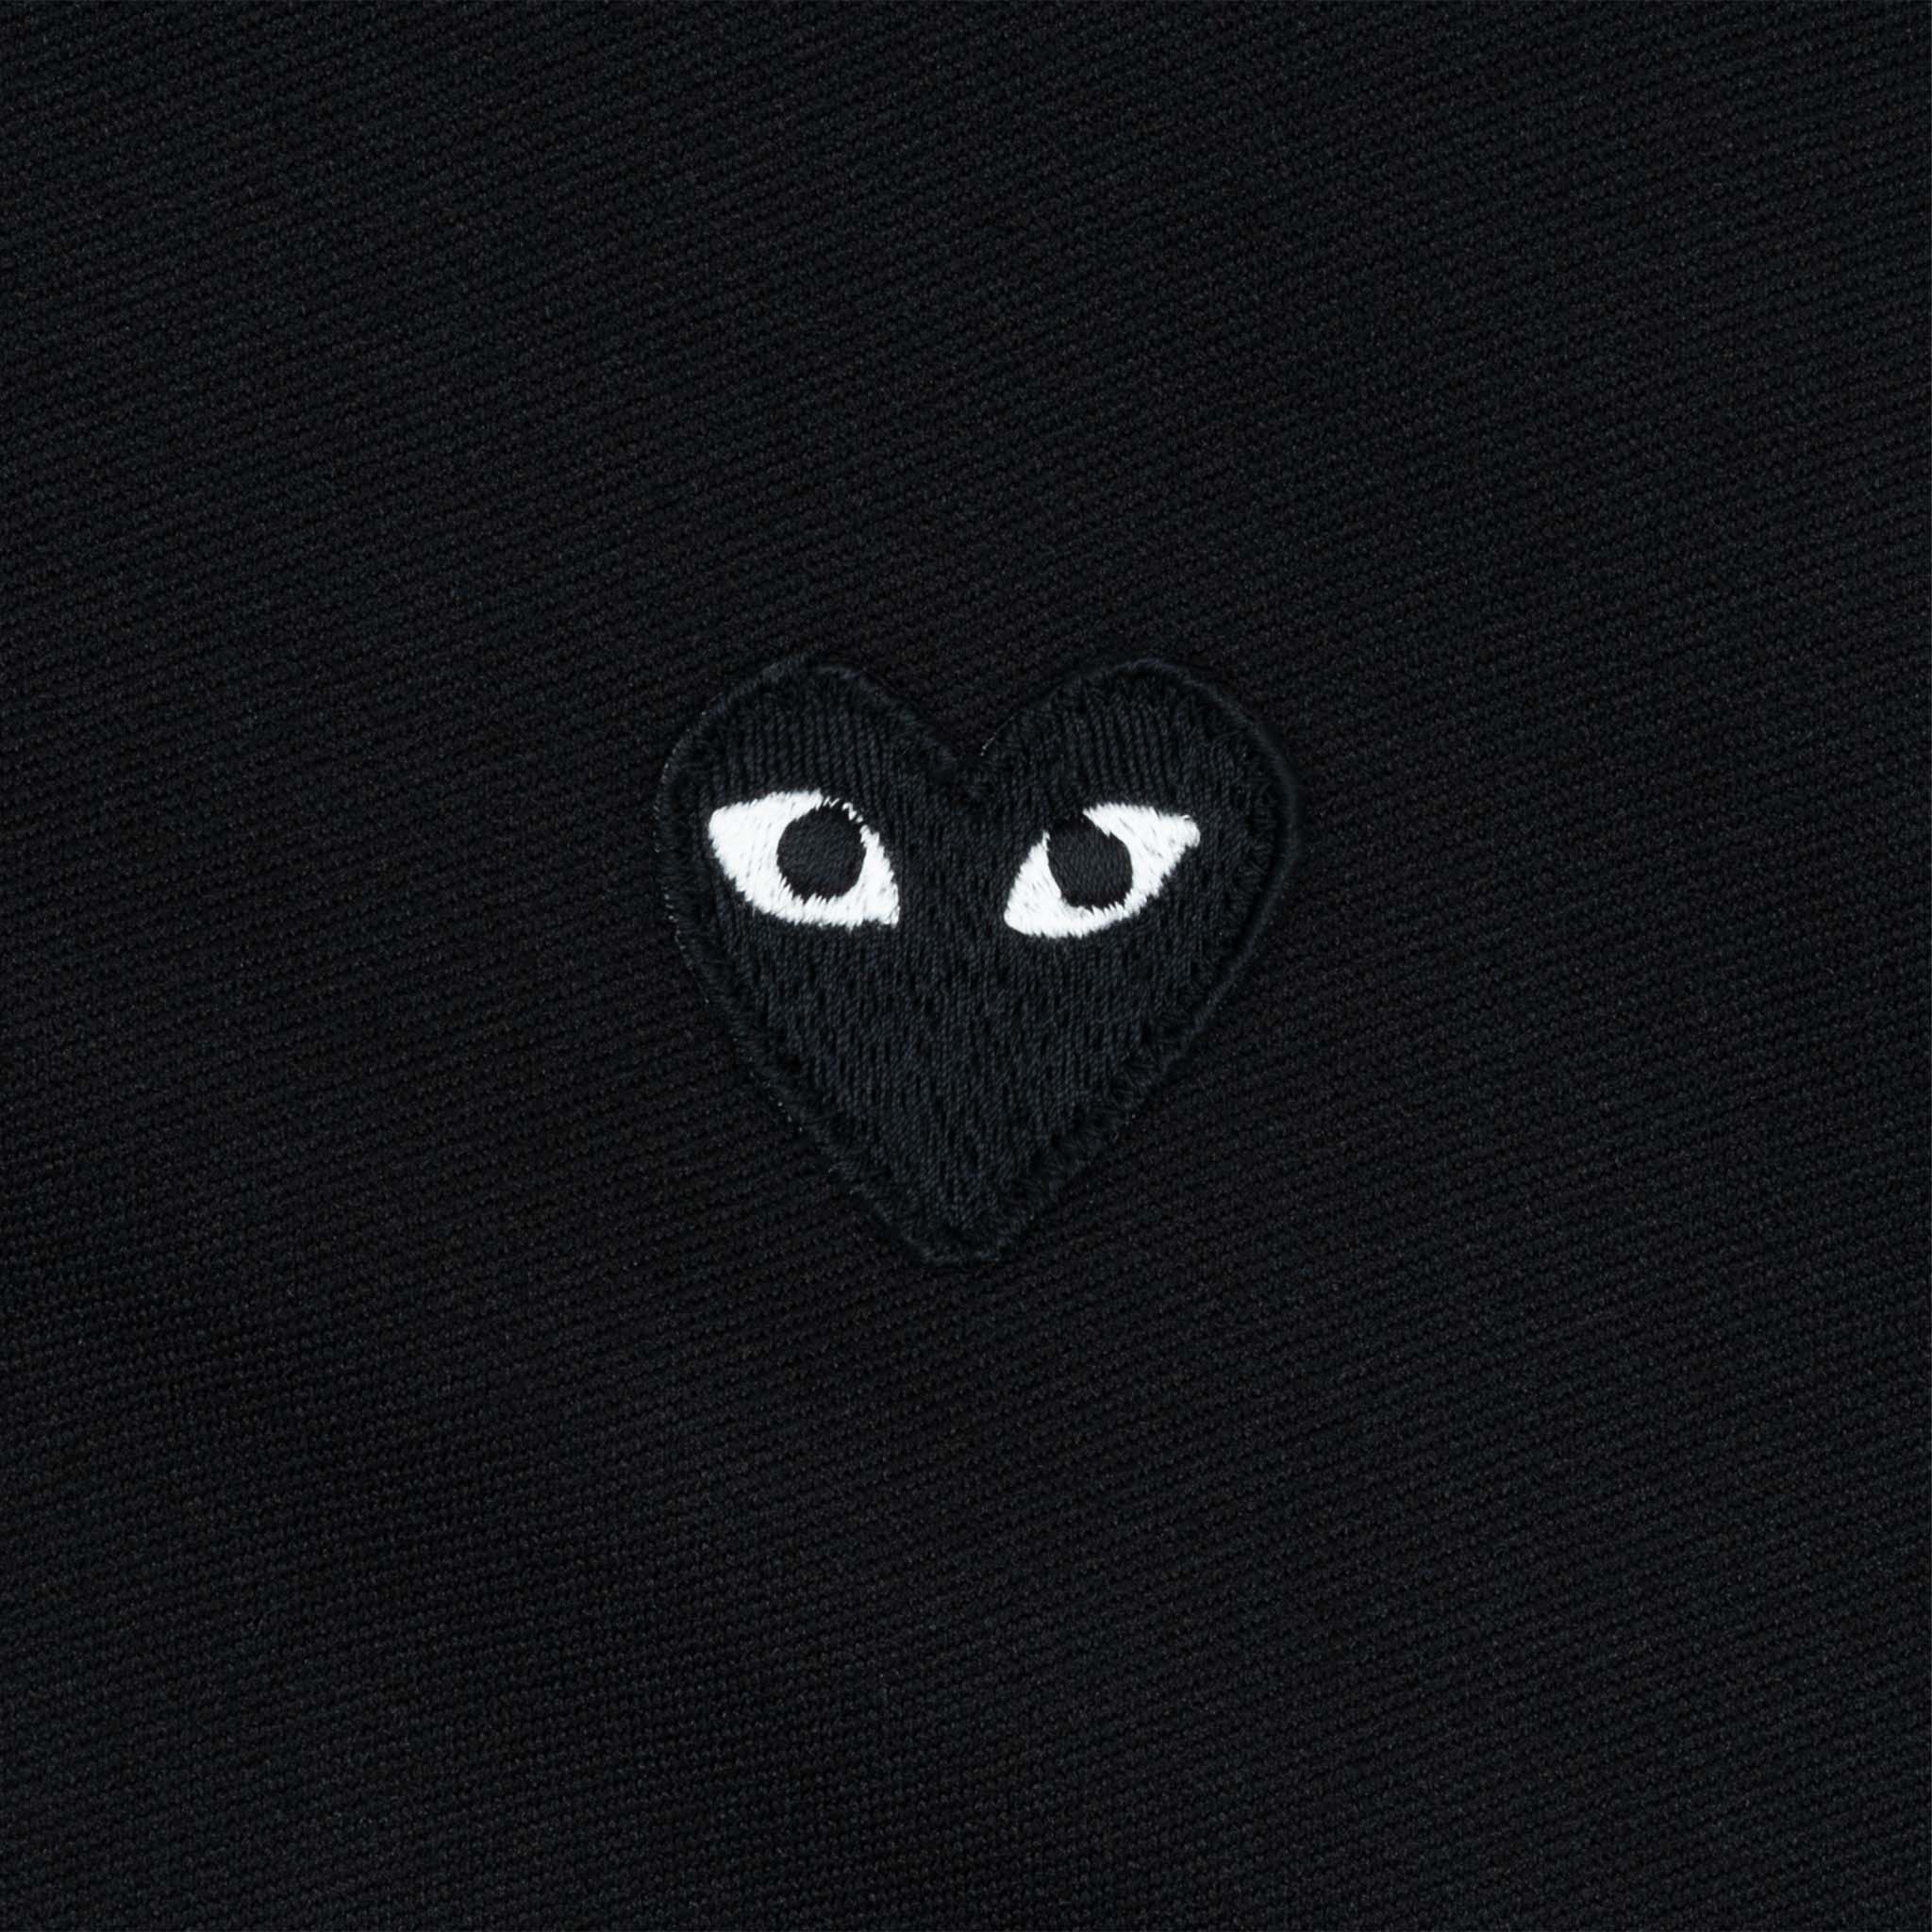 Black heart logo minimalism Royalty Free Vector Image